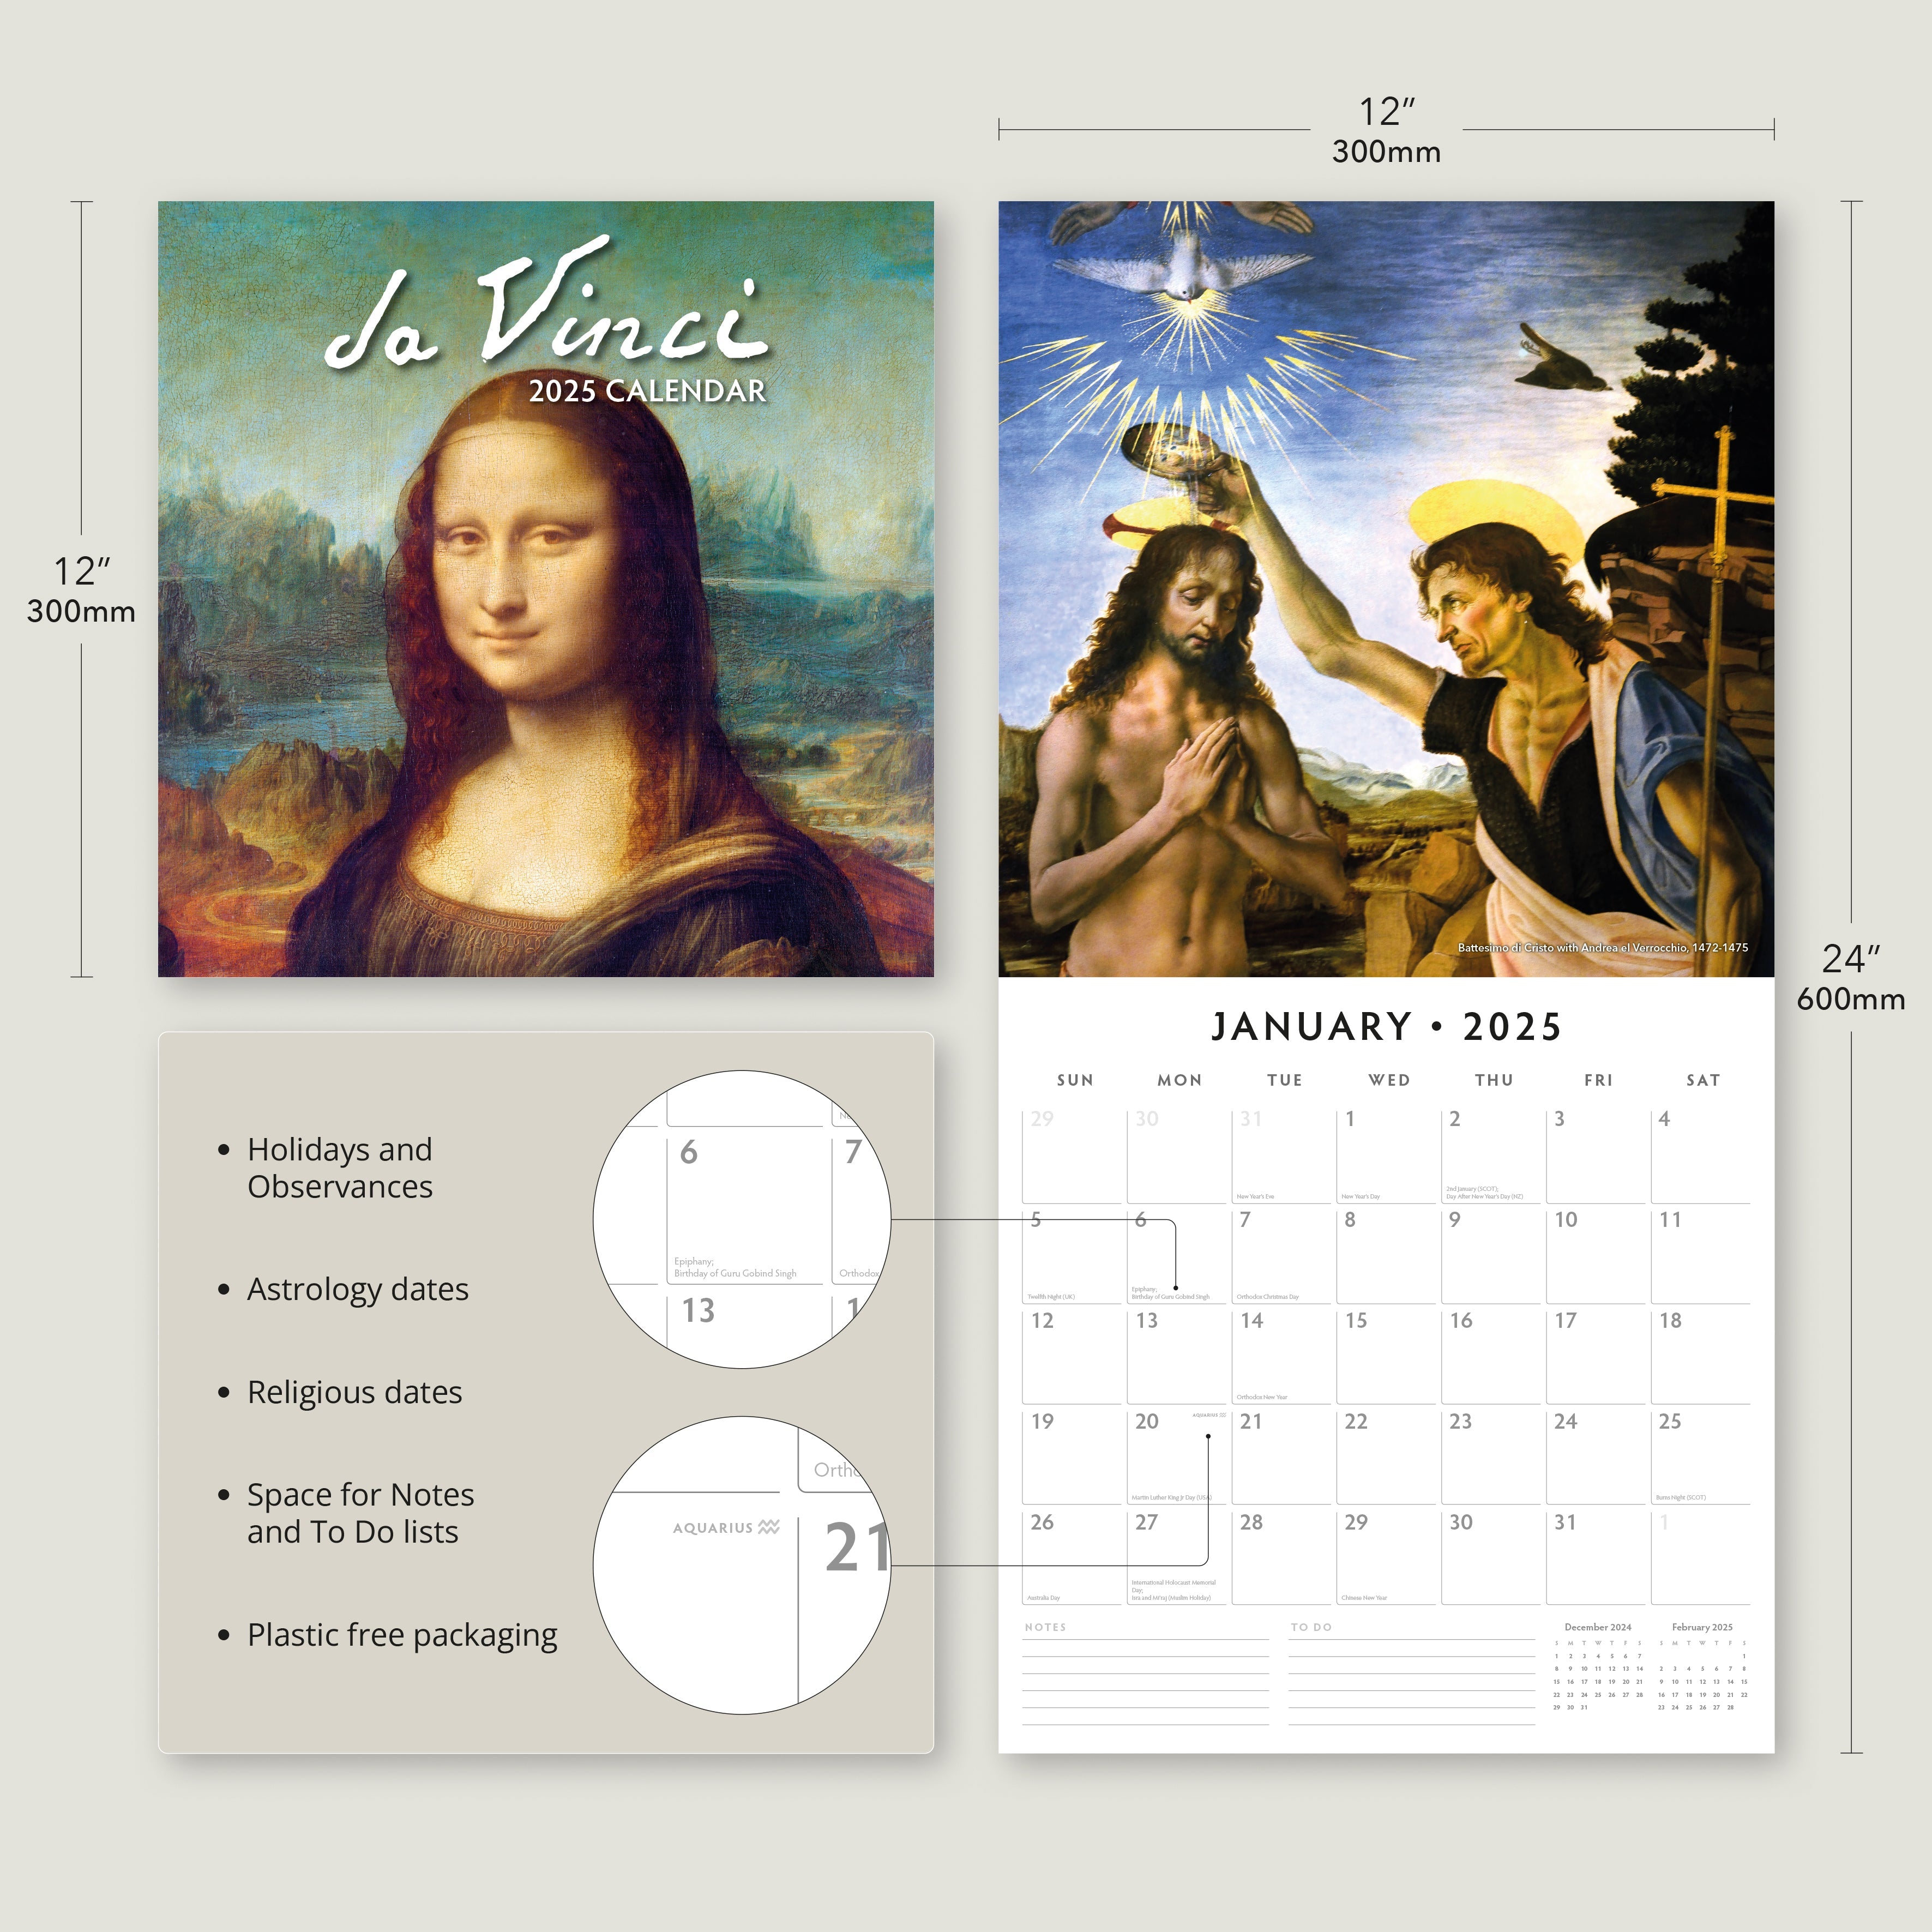 2025 Da Vinci - Square Wall Calendar